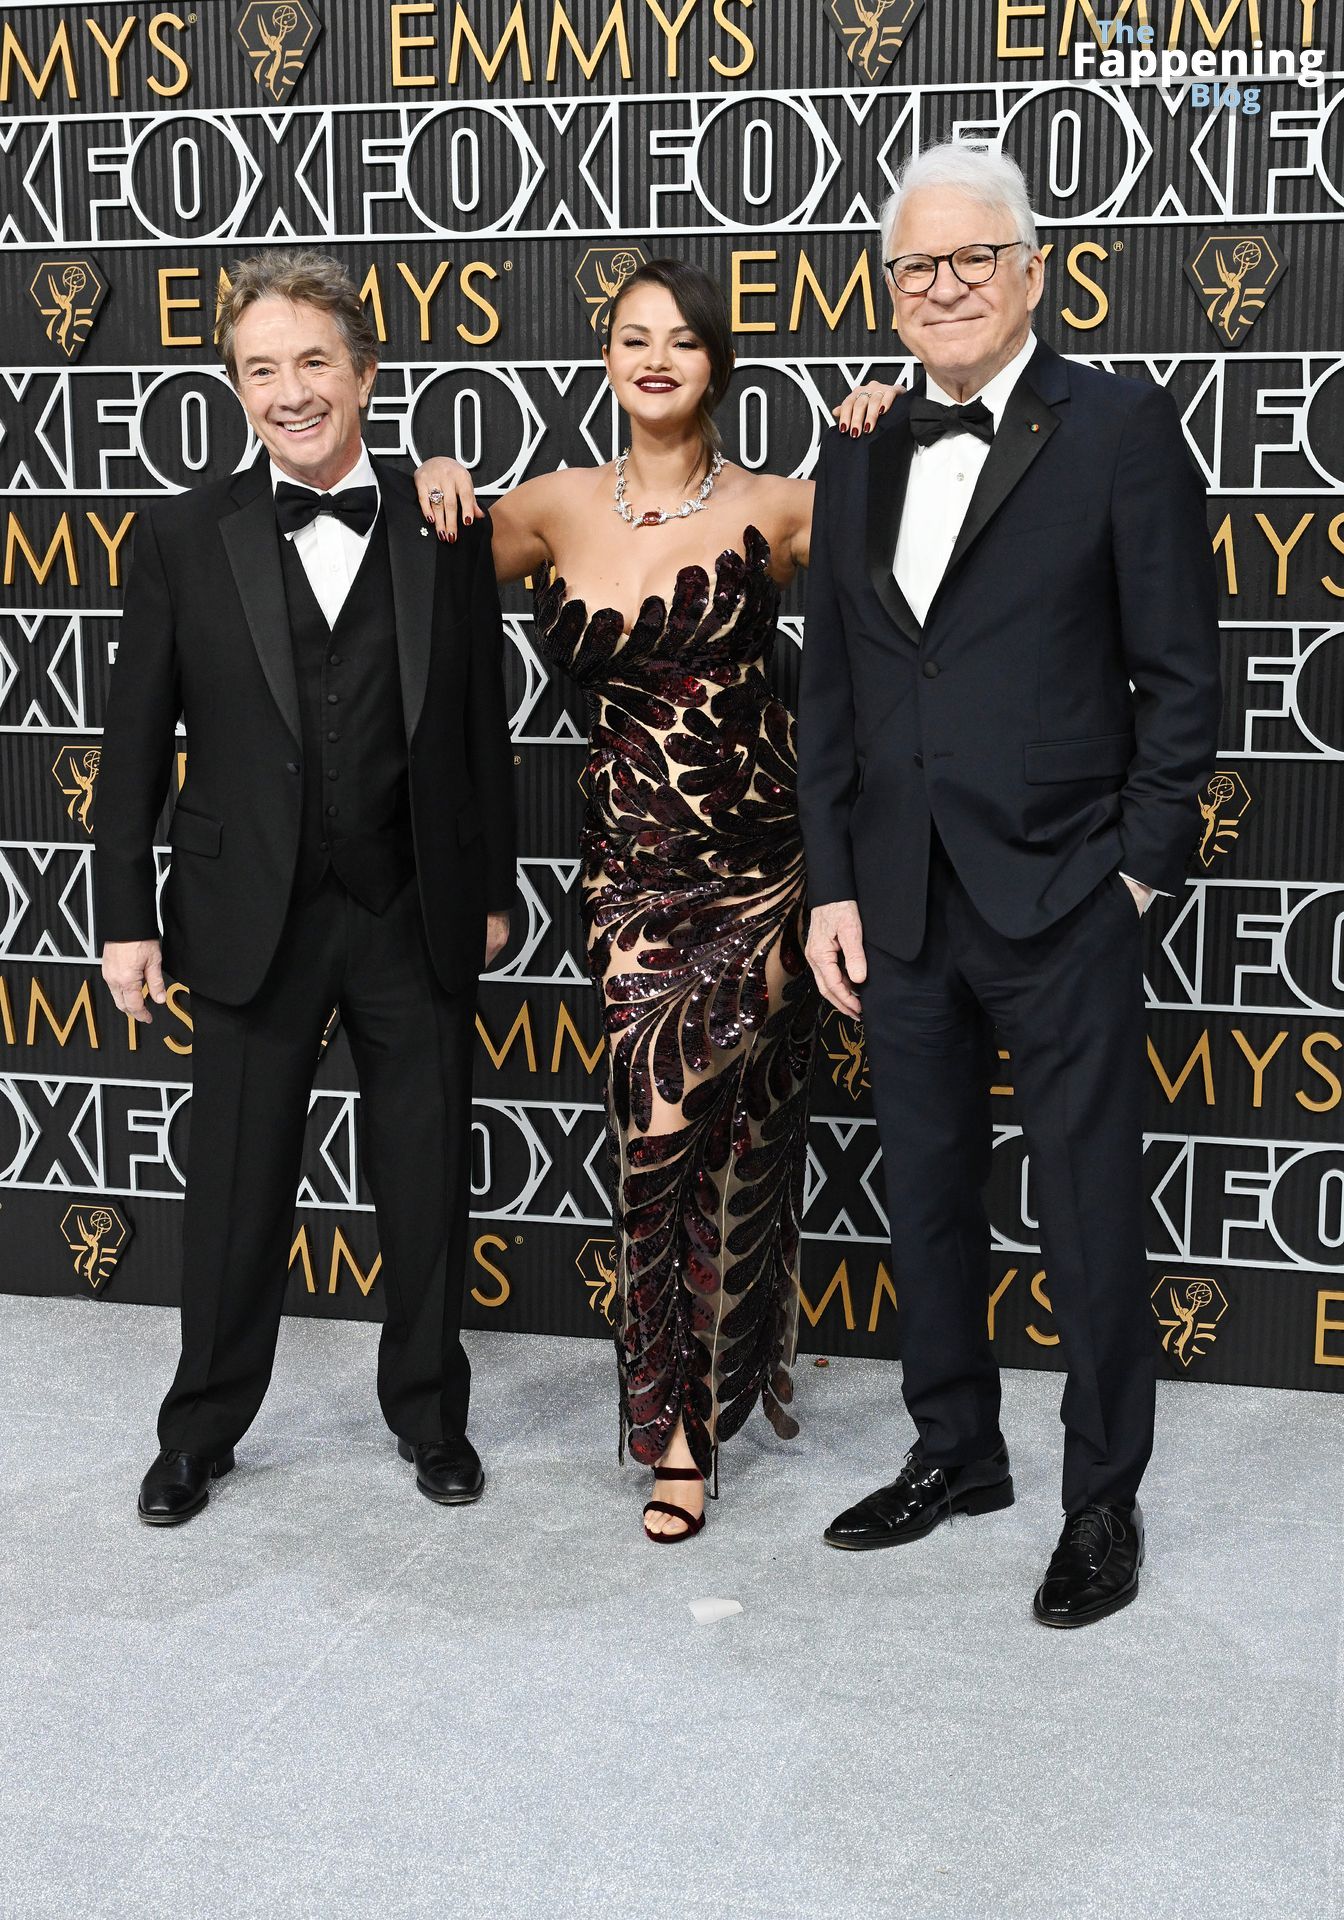 Selena Gomez Looks Hot at the 75th Primetime Emmy Awards (107 Photos)